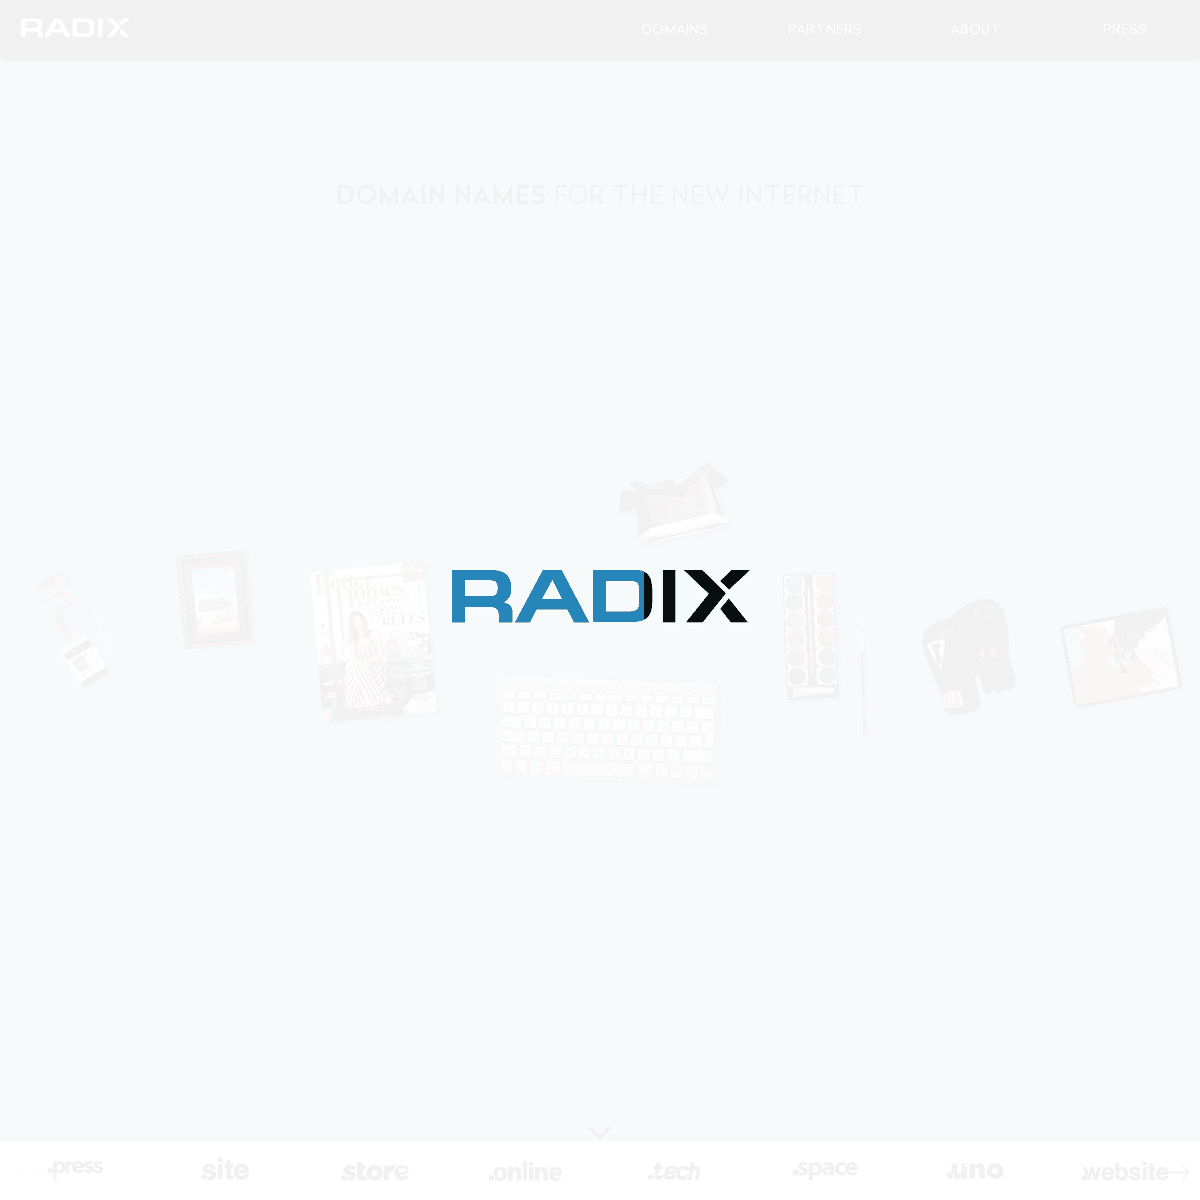 A complete backup of https://radix.website